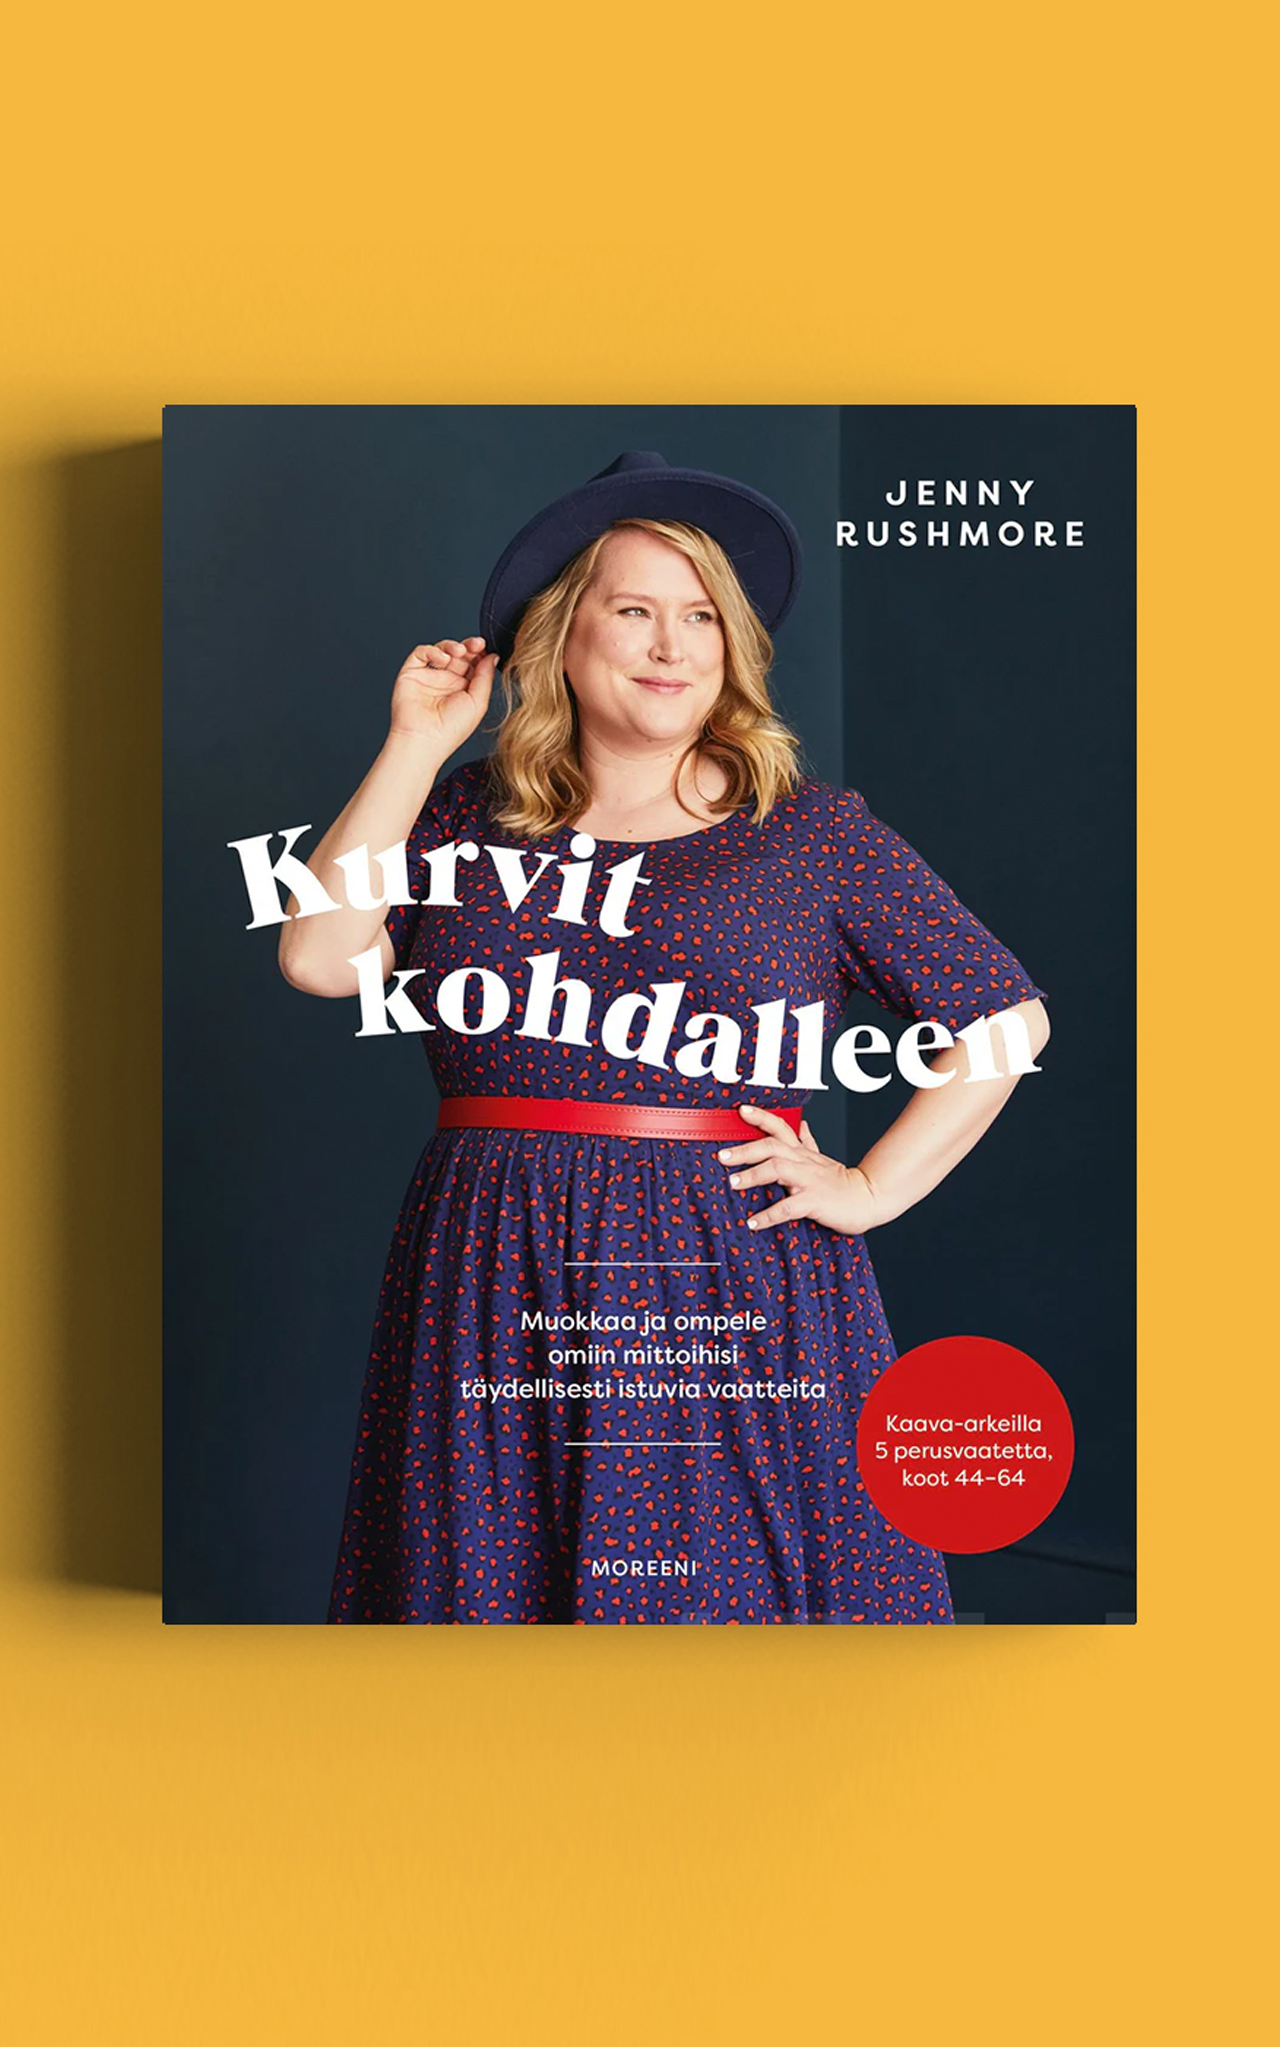 Where to buy Ahead of the Curve in Finnish (Kurvit kohdalleen